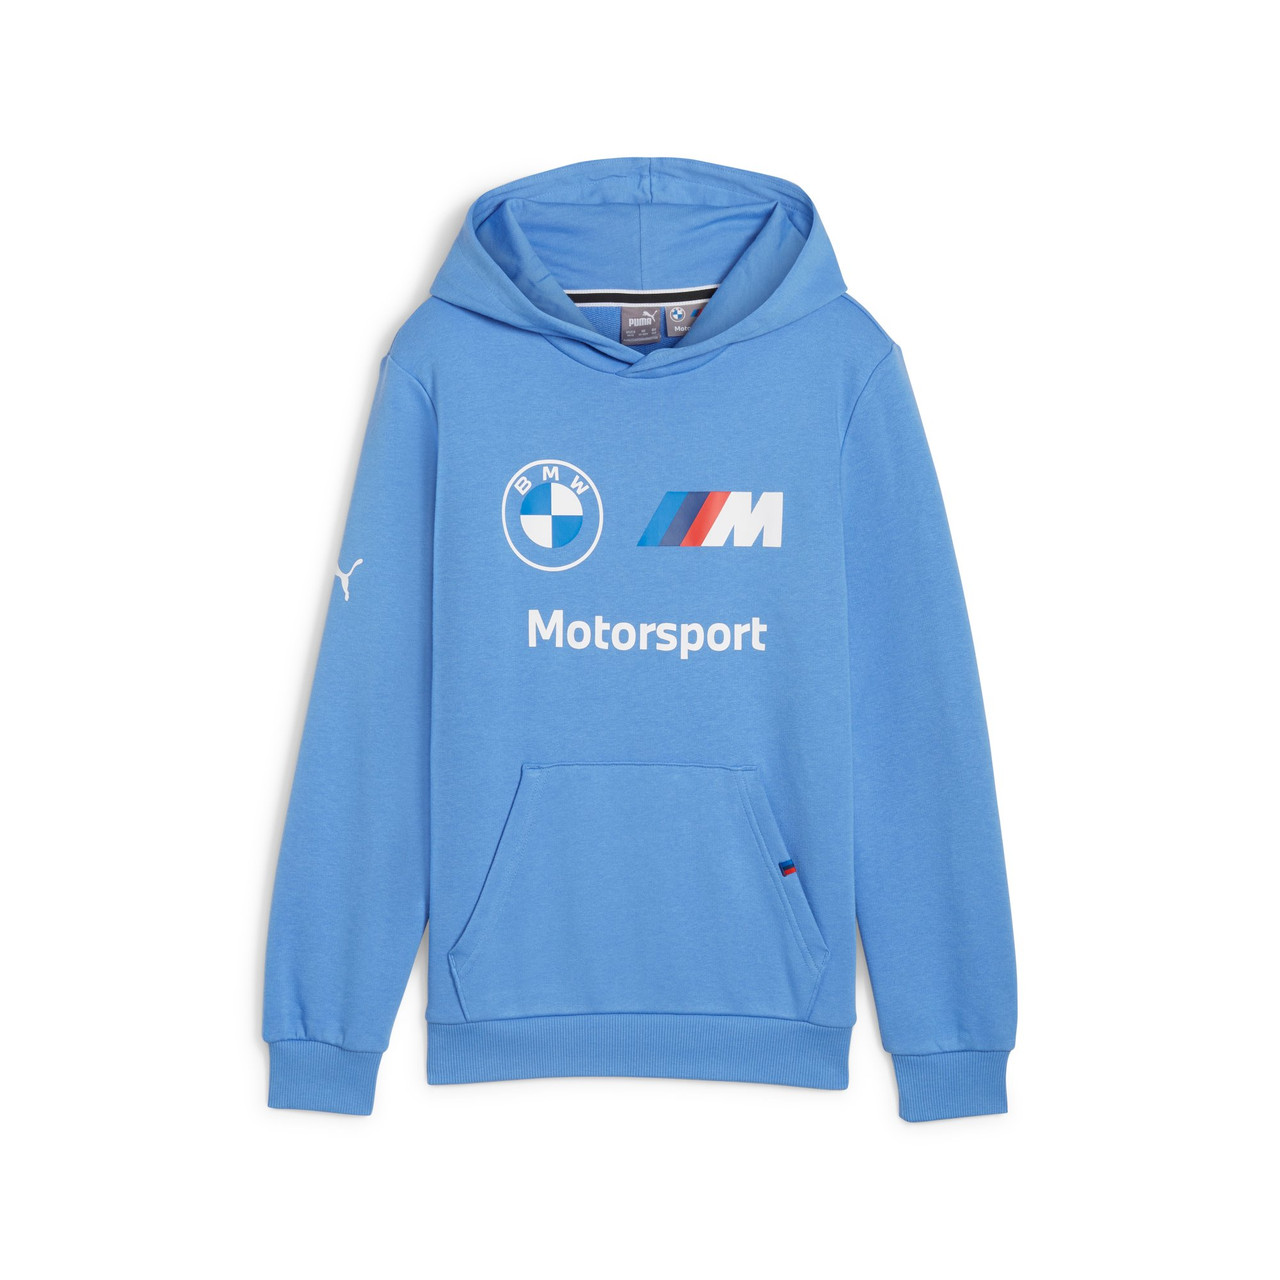 Genuine M Motorsport Logo Childrens Kids Hoodie Light Blue 